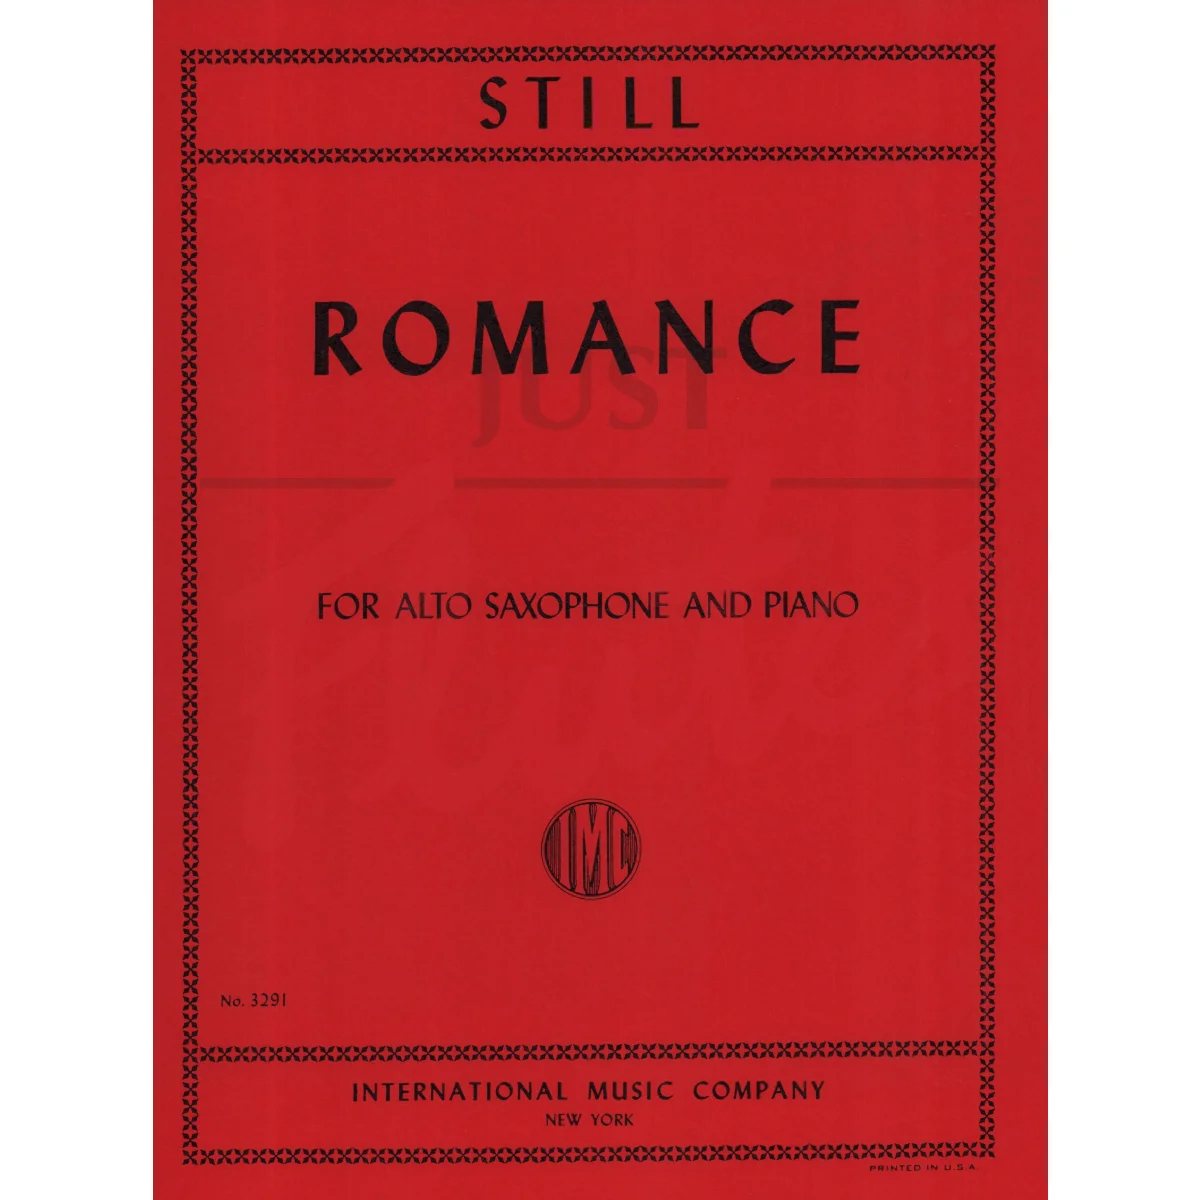 Romance for Alto Saxophone and Piano